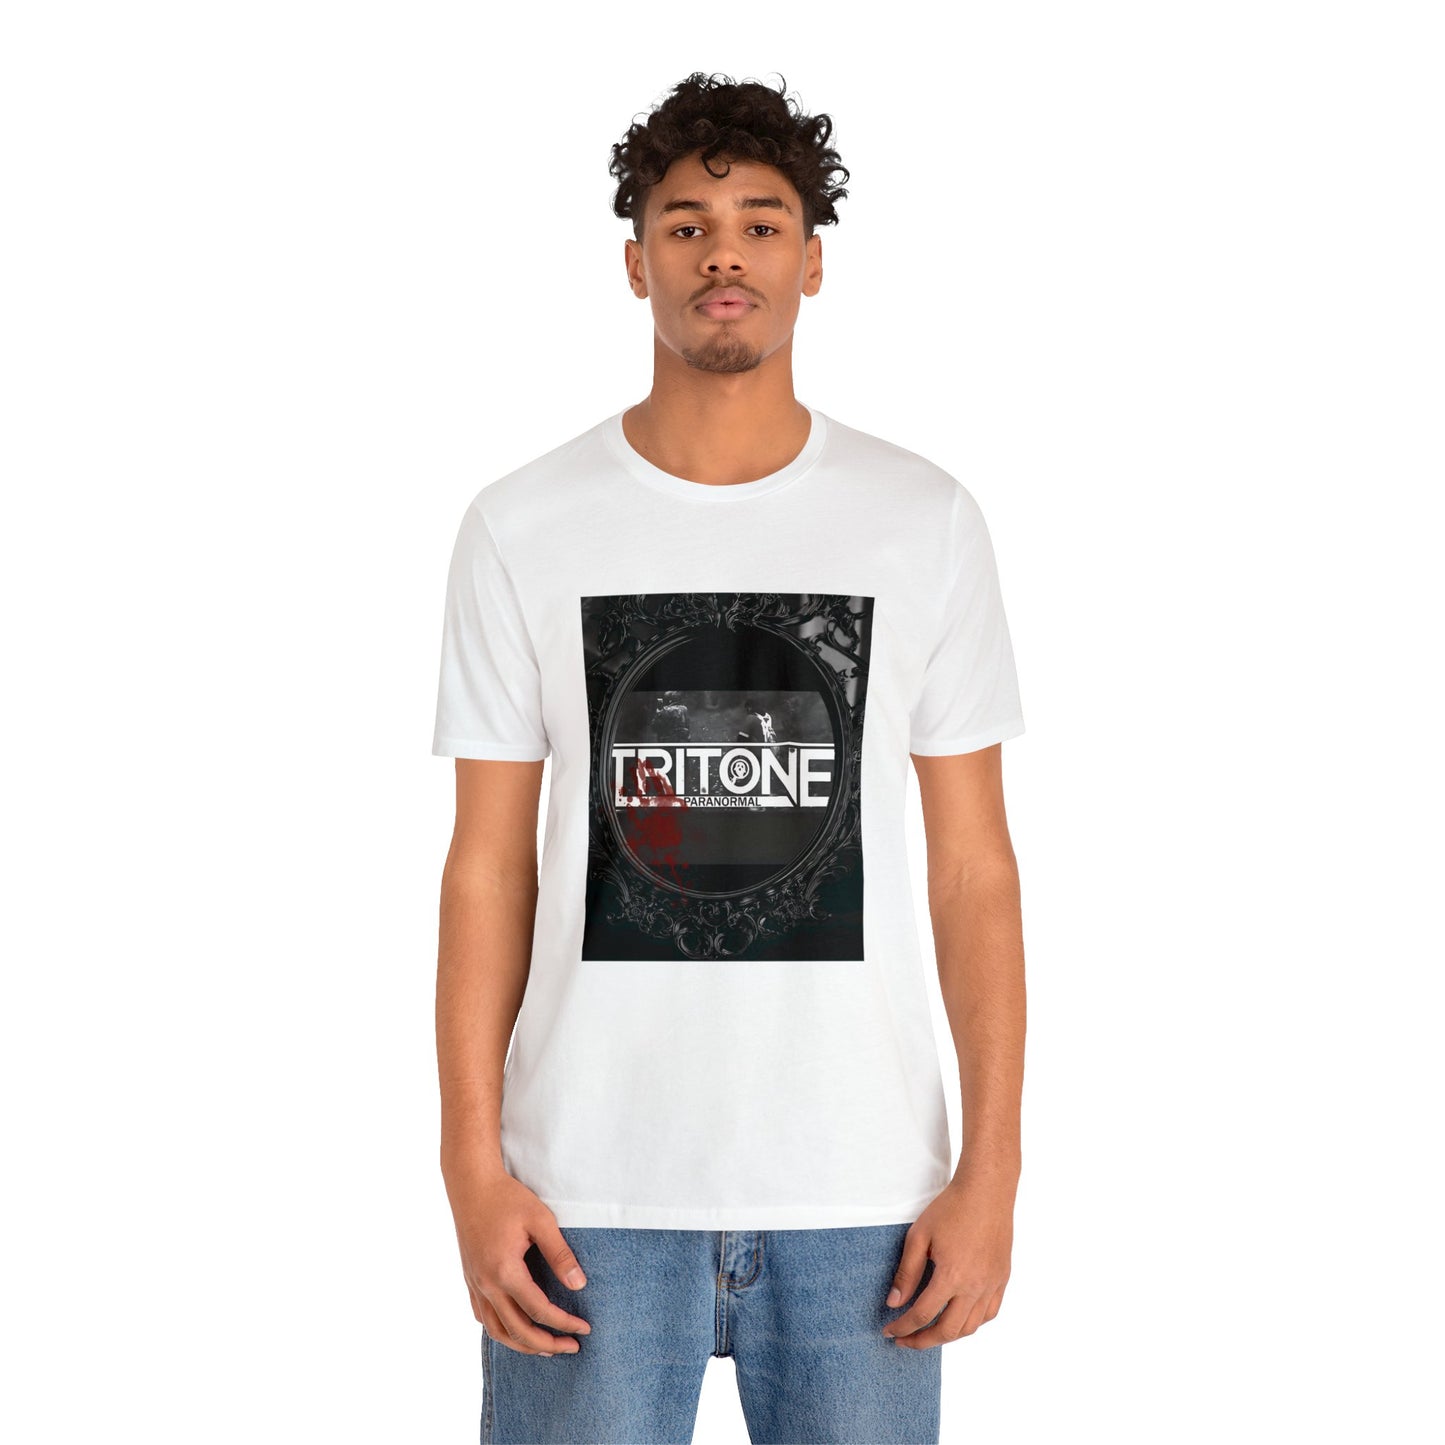 Tritone Paranormal- Vintage Haunt T-Shirt